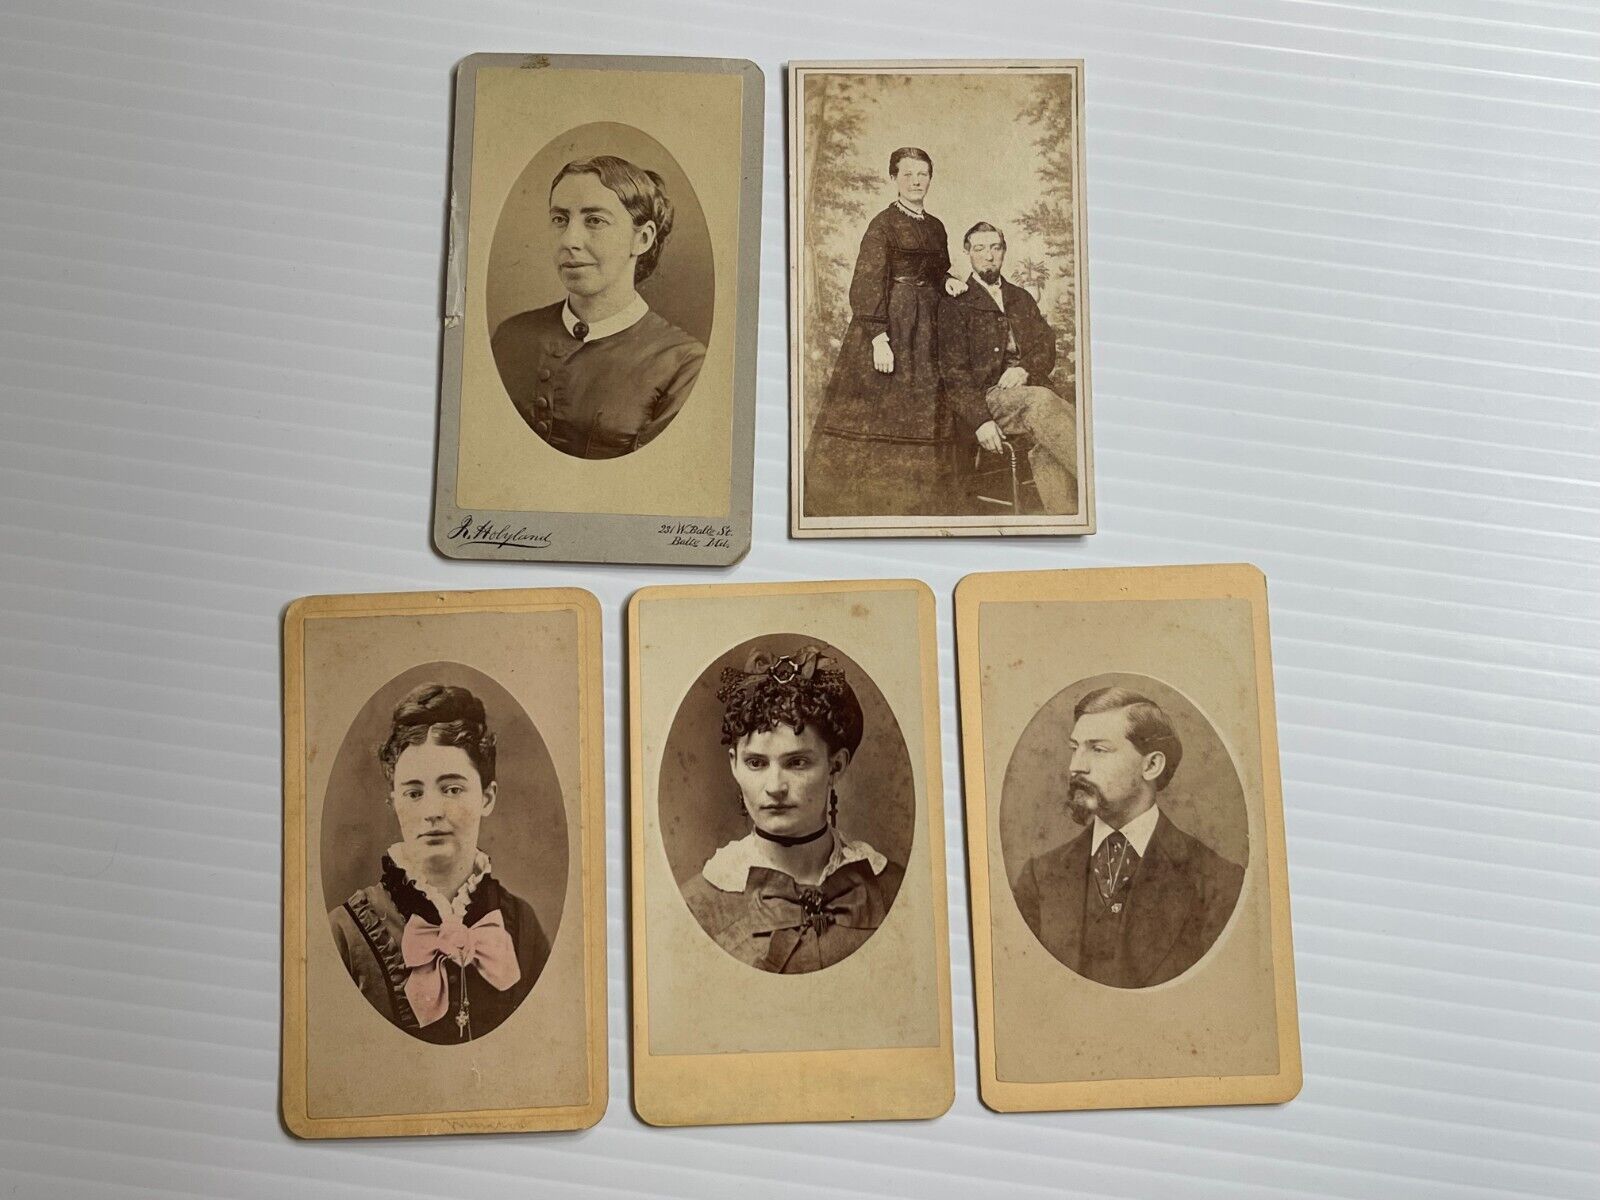 Antique Photographs Mini Cabinet Card Lot of 5 Photos - Late 1800s Photos